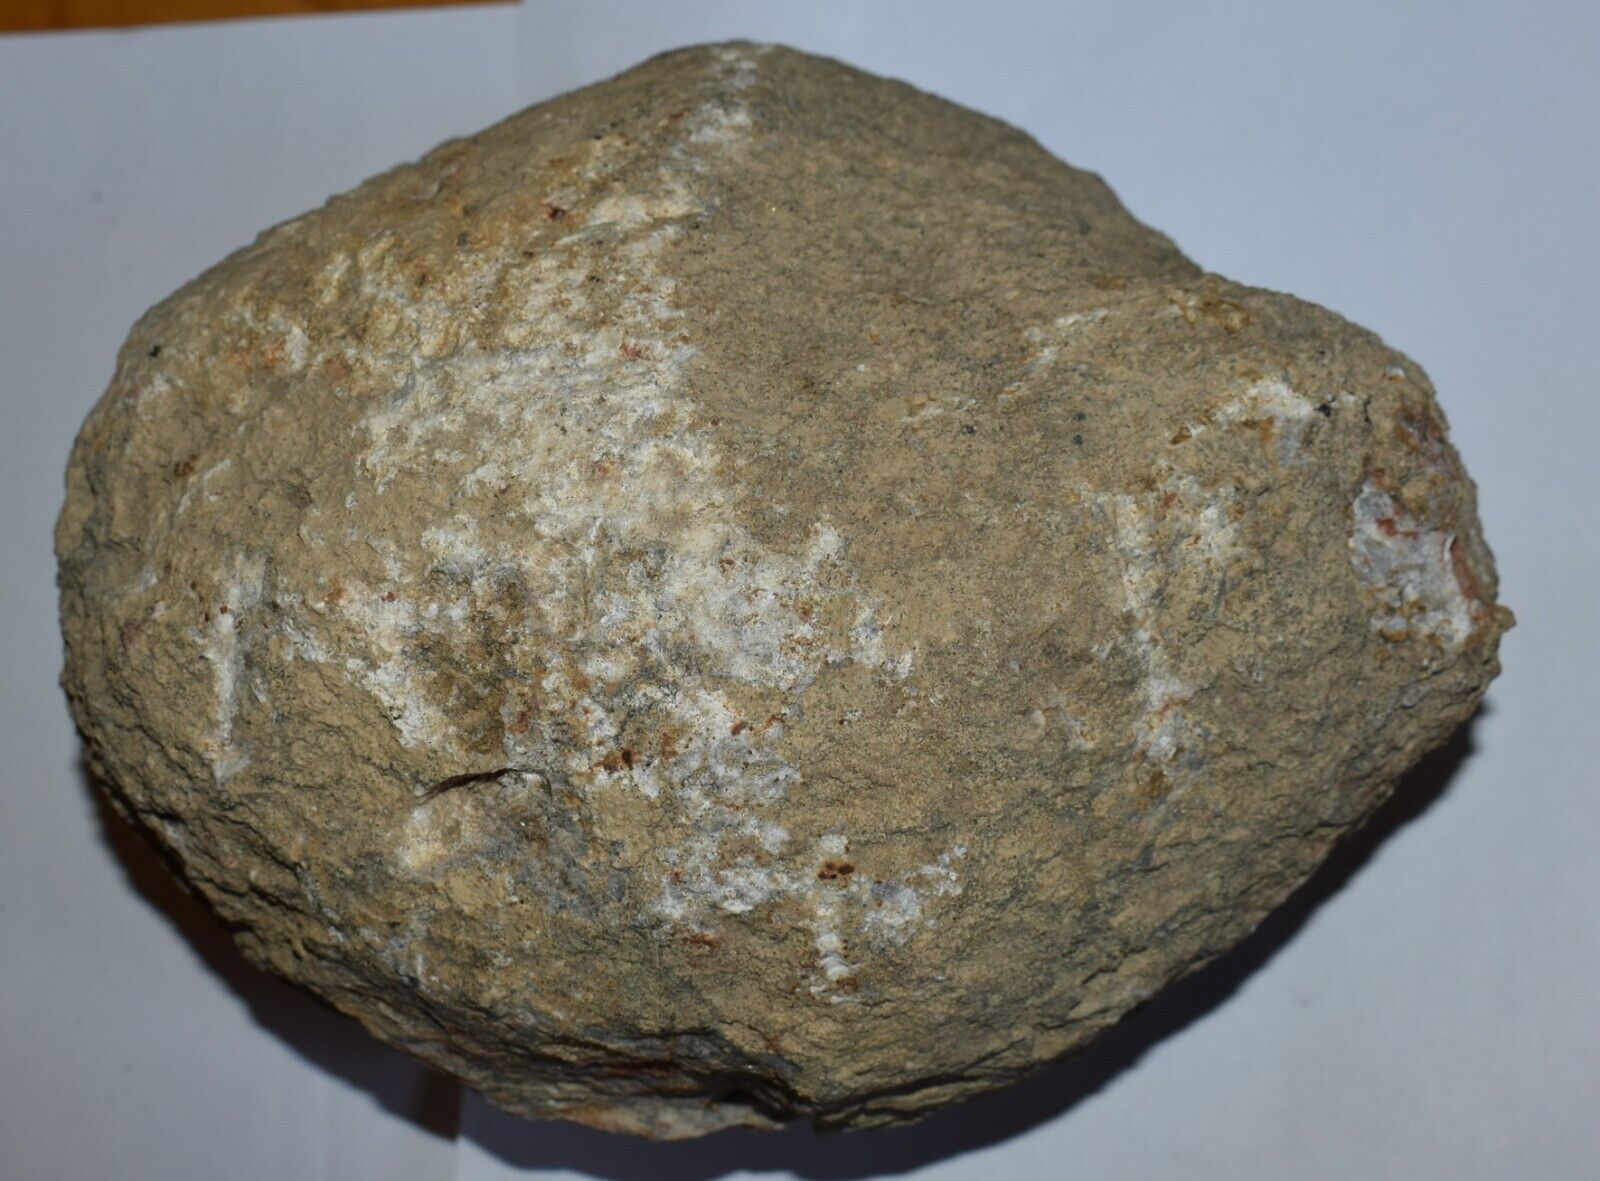 Geode Whole from North Carolina 100% Natural 15 lb. Rare Large